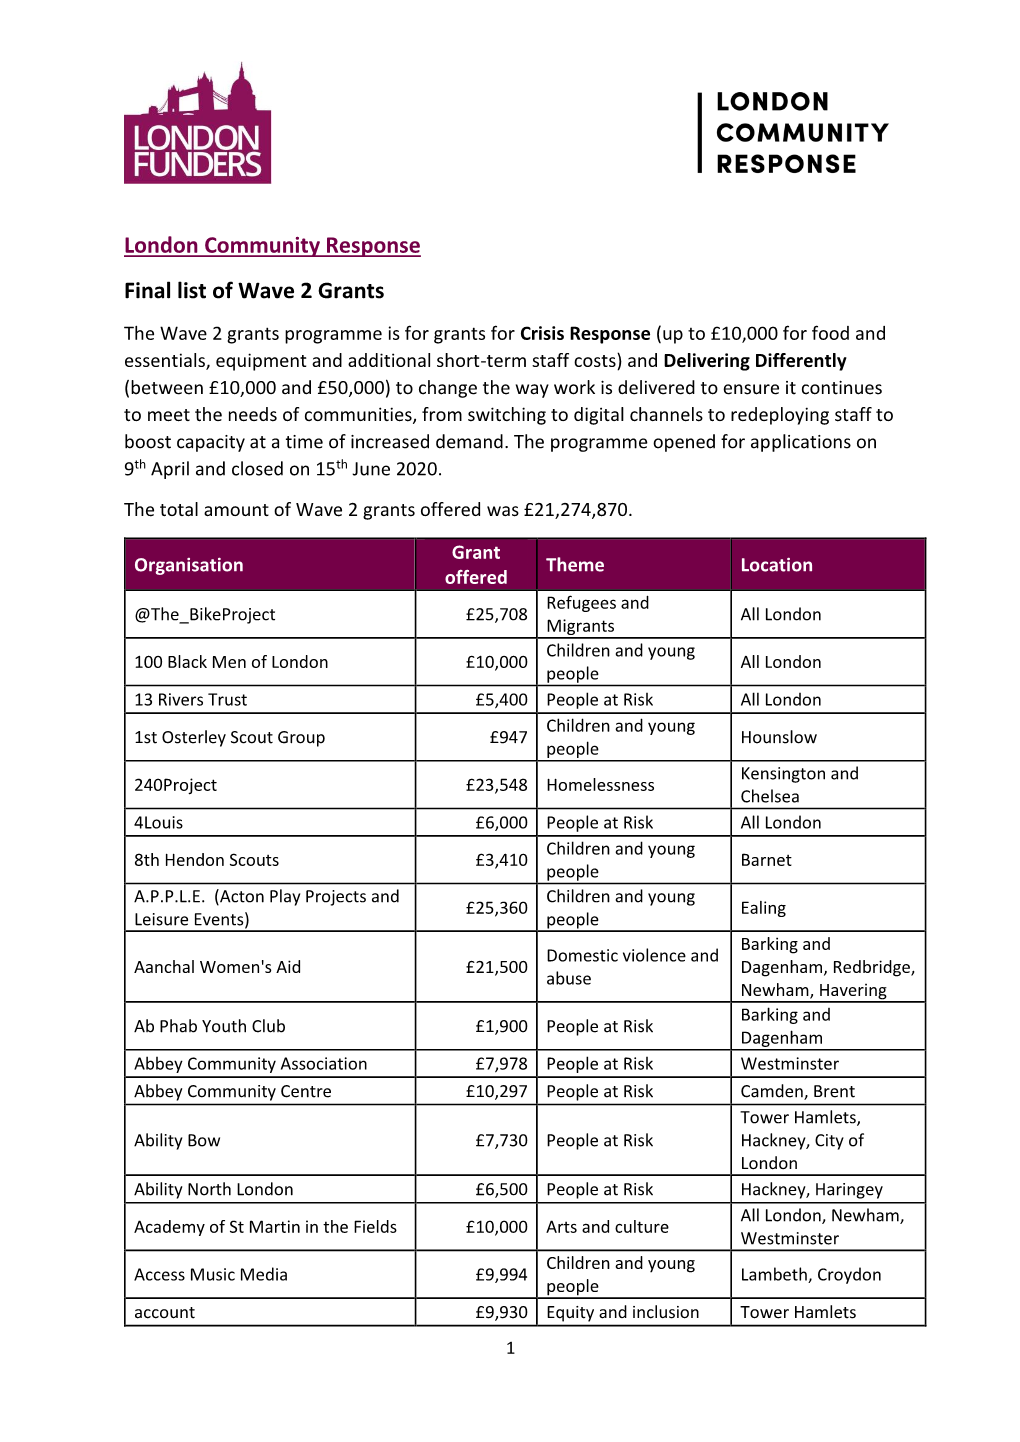 London Community Response Final List of Wave 2 Grants